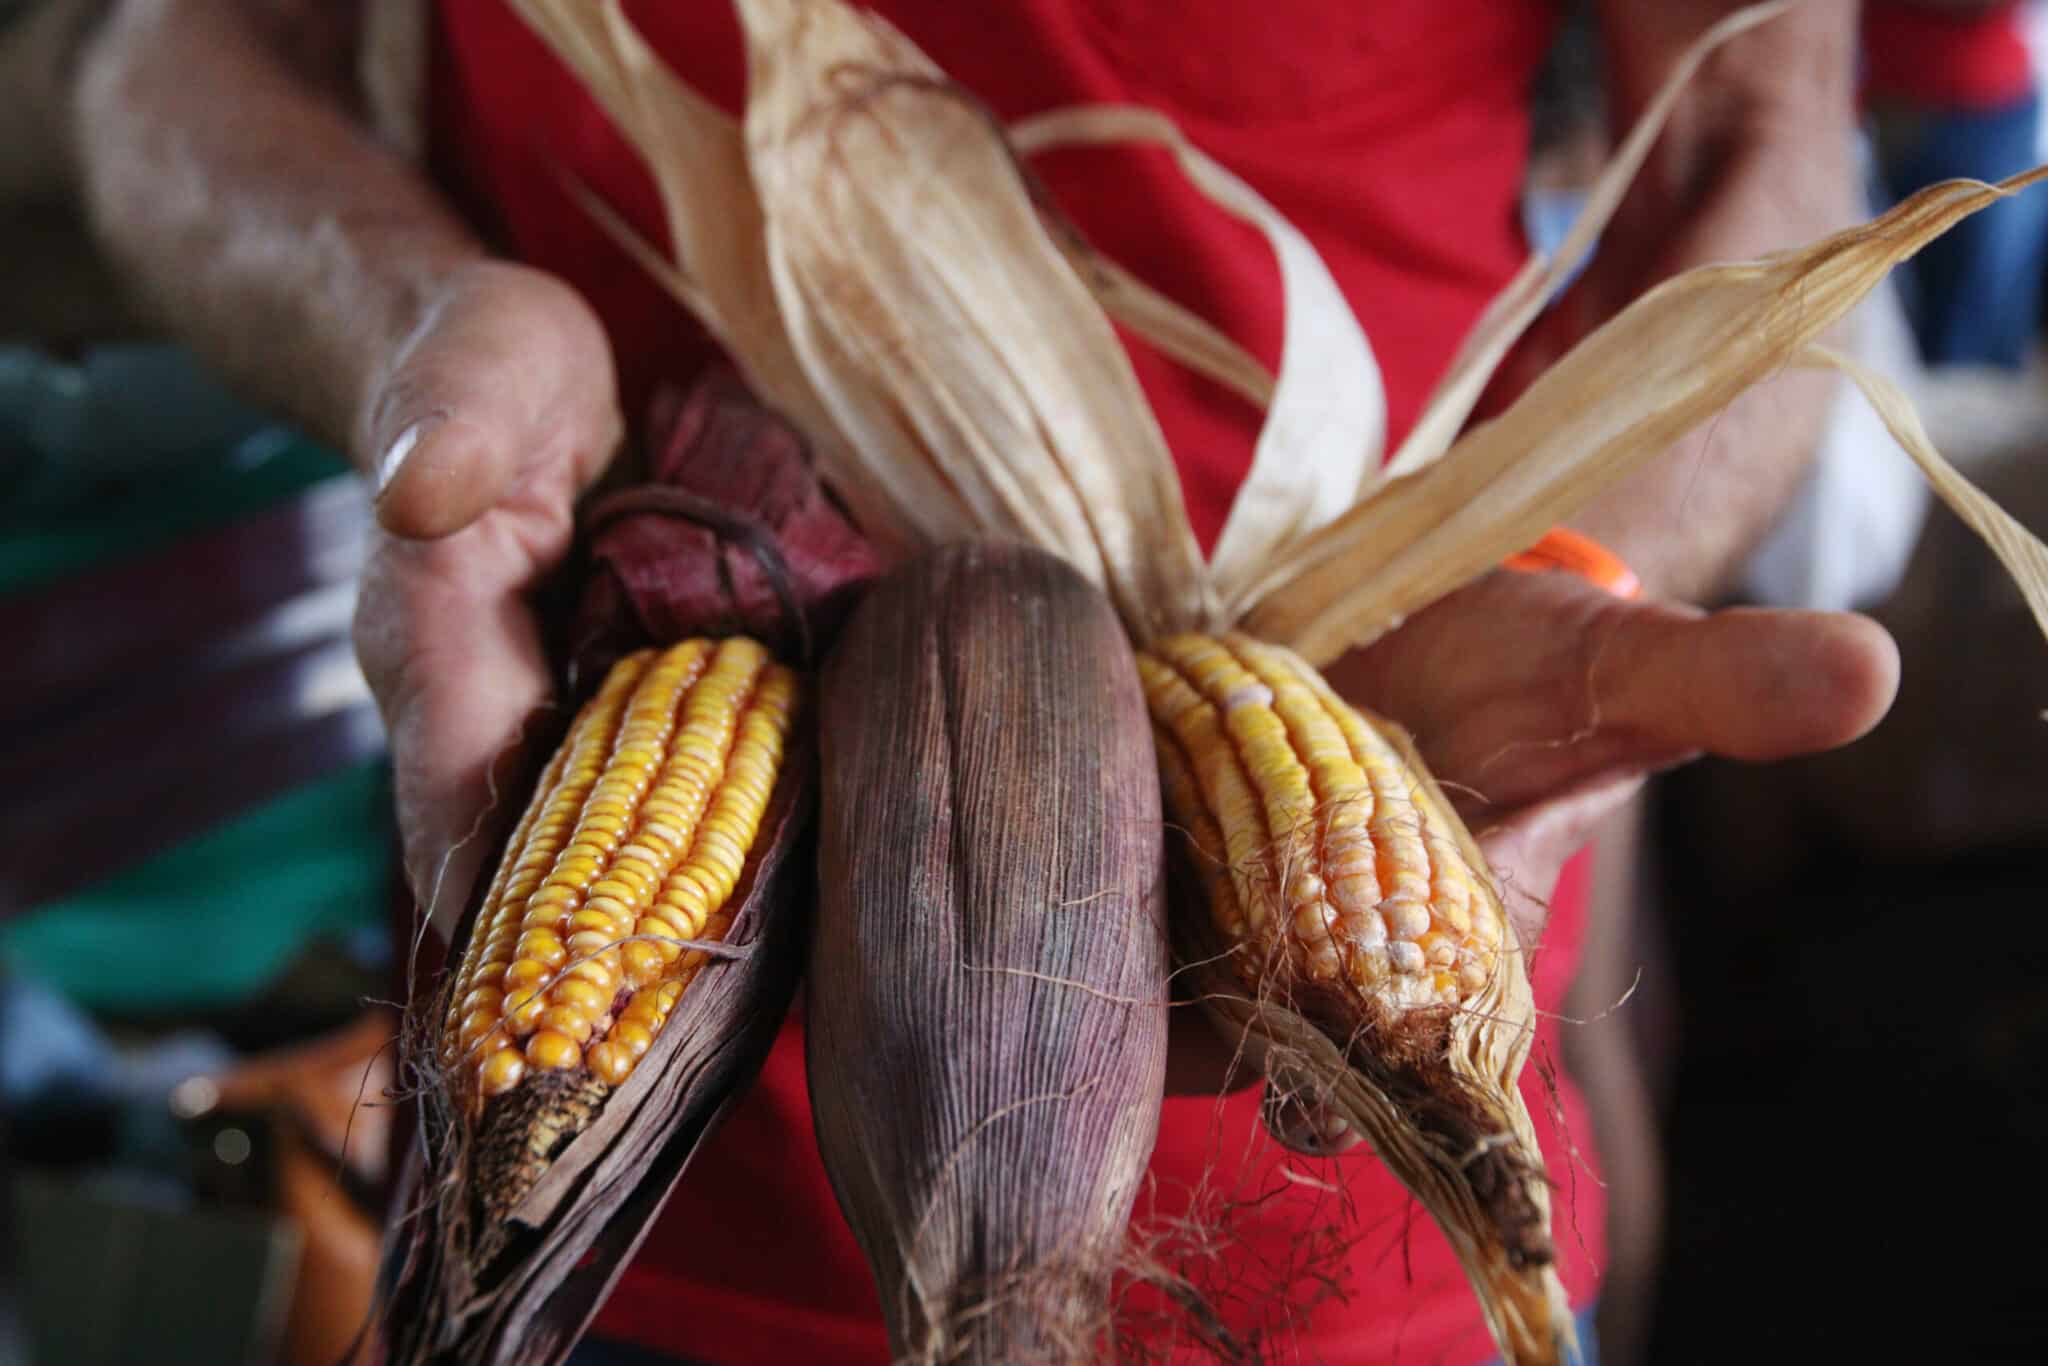 producao sustentavel de alimentos depende da reforma agraria diz mst scaled